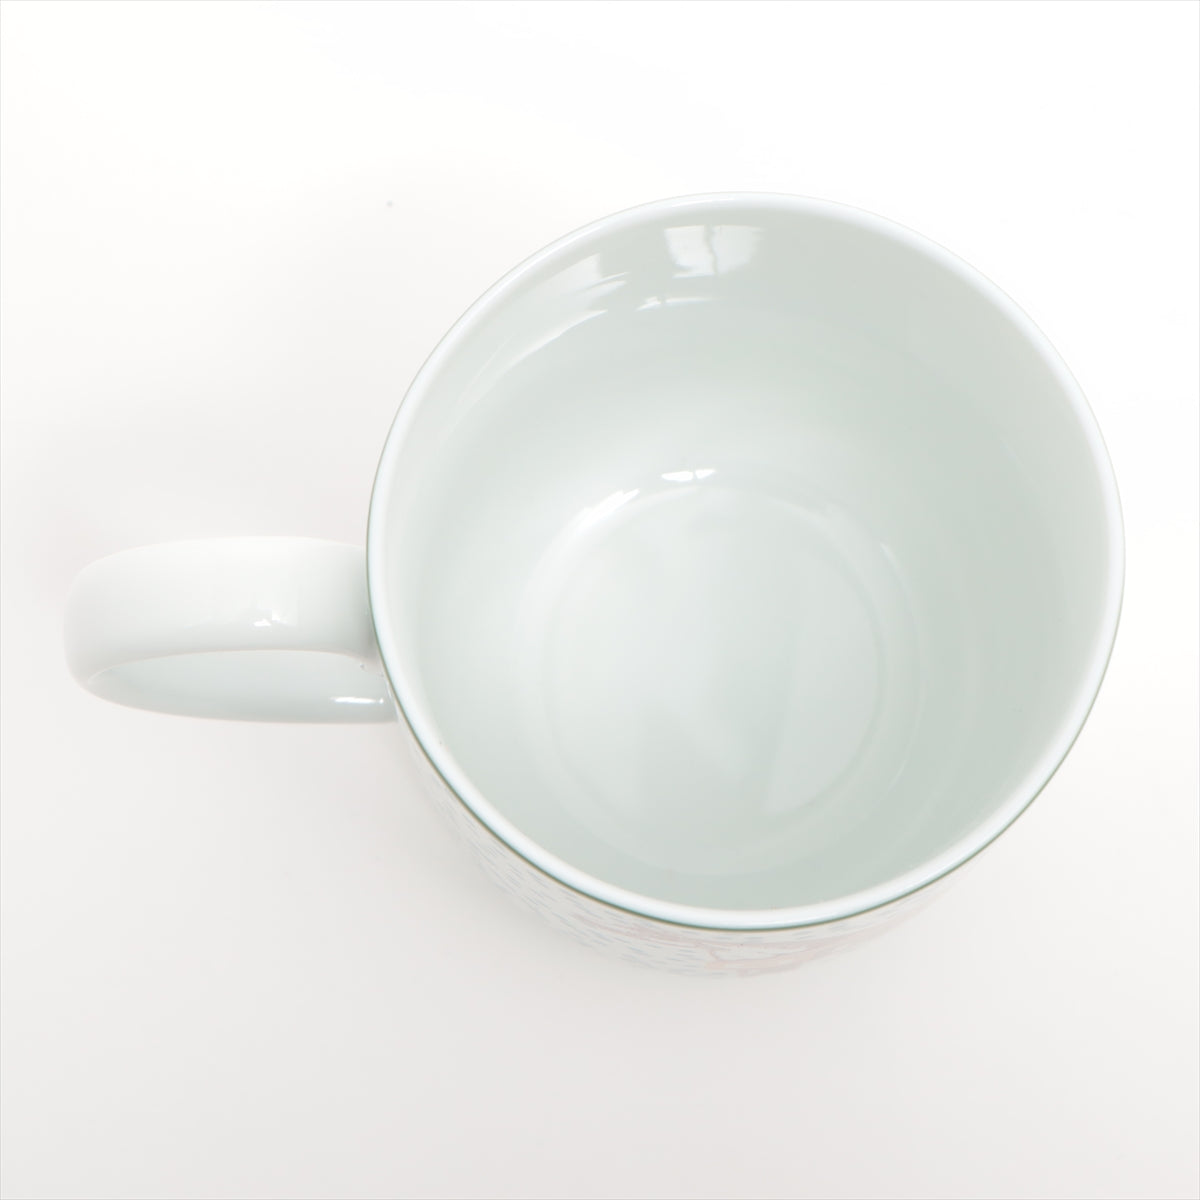 Hermès ipomovir Mug cup Ceramic Multicolor